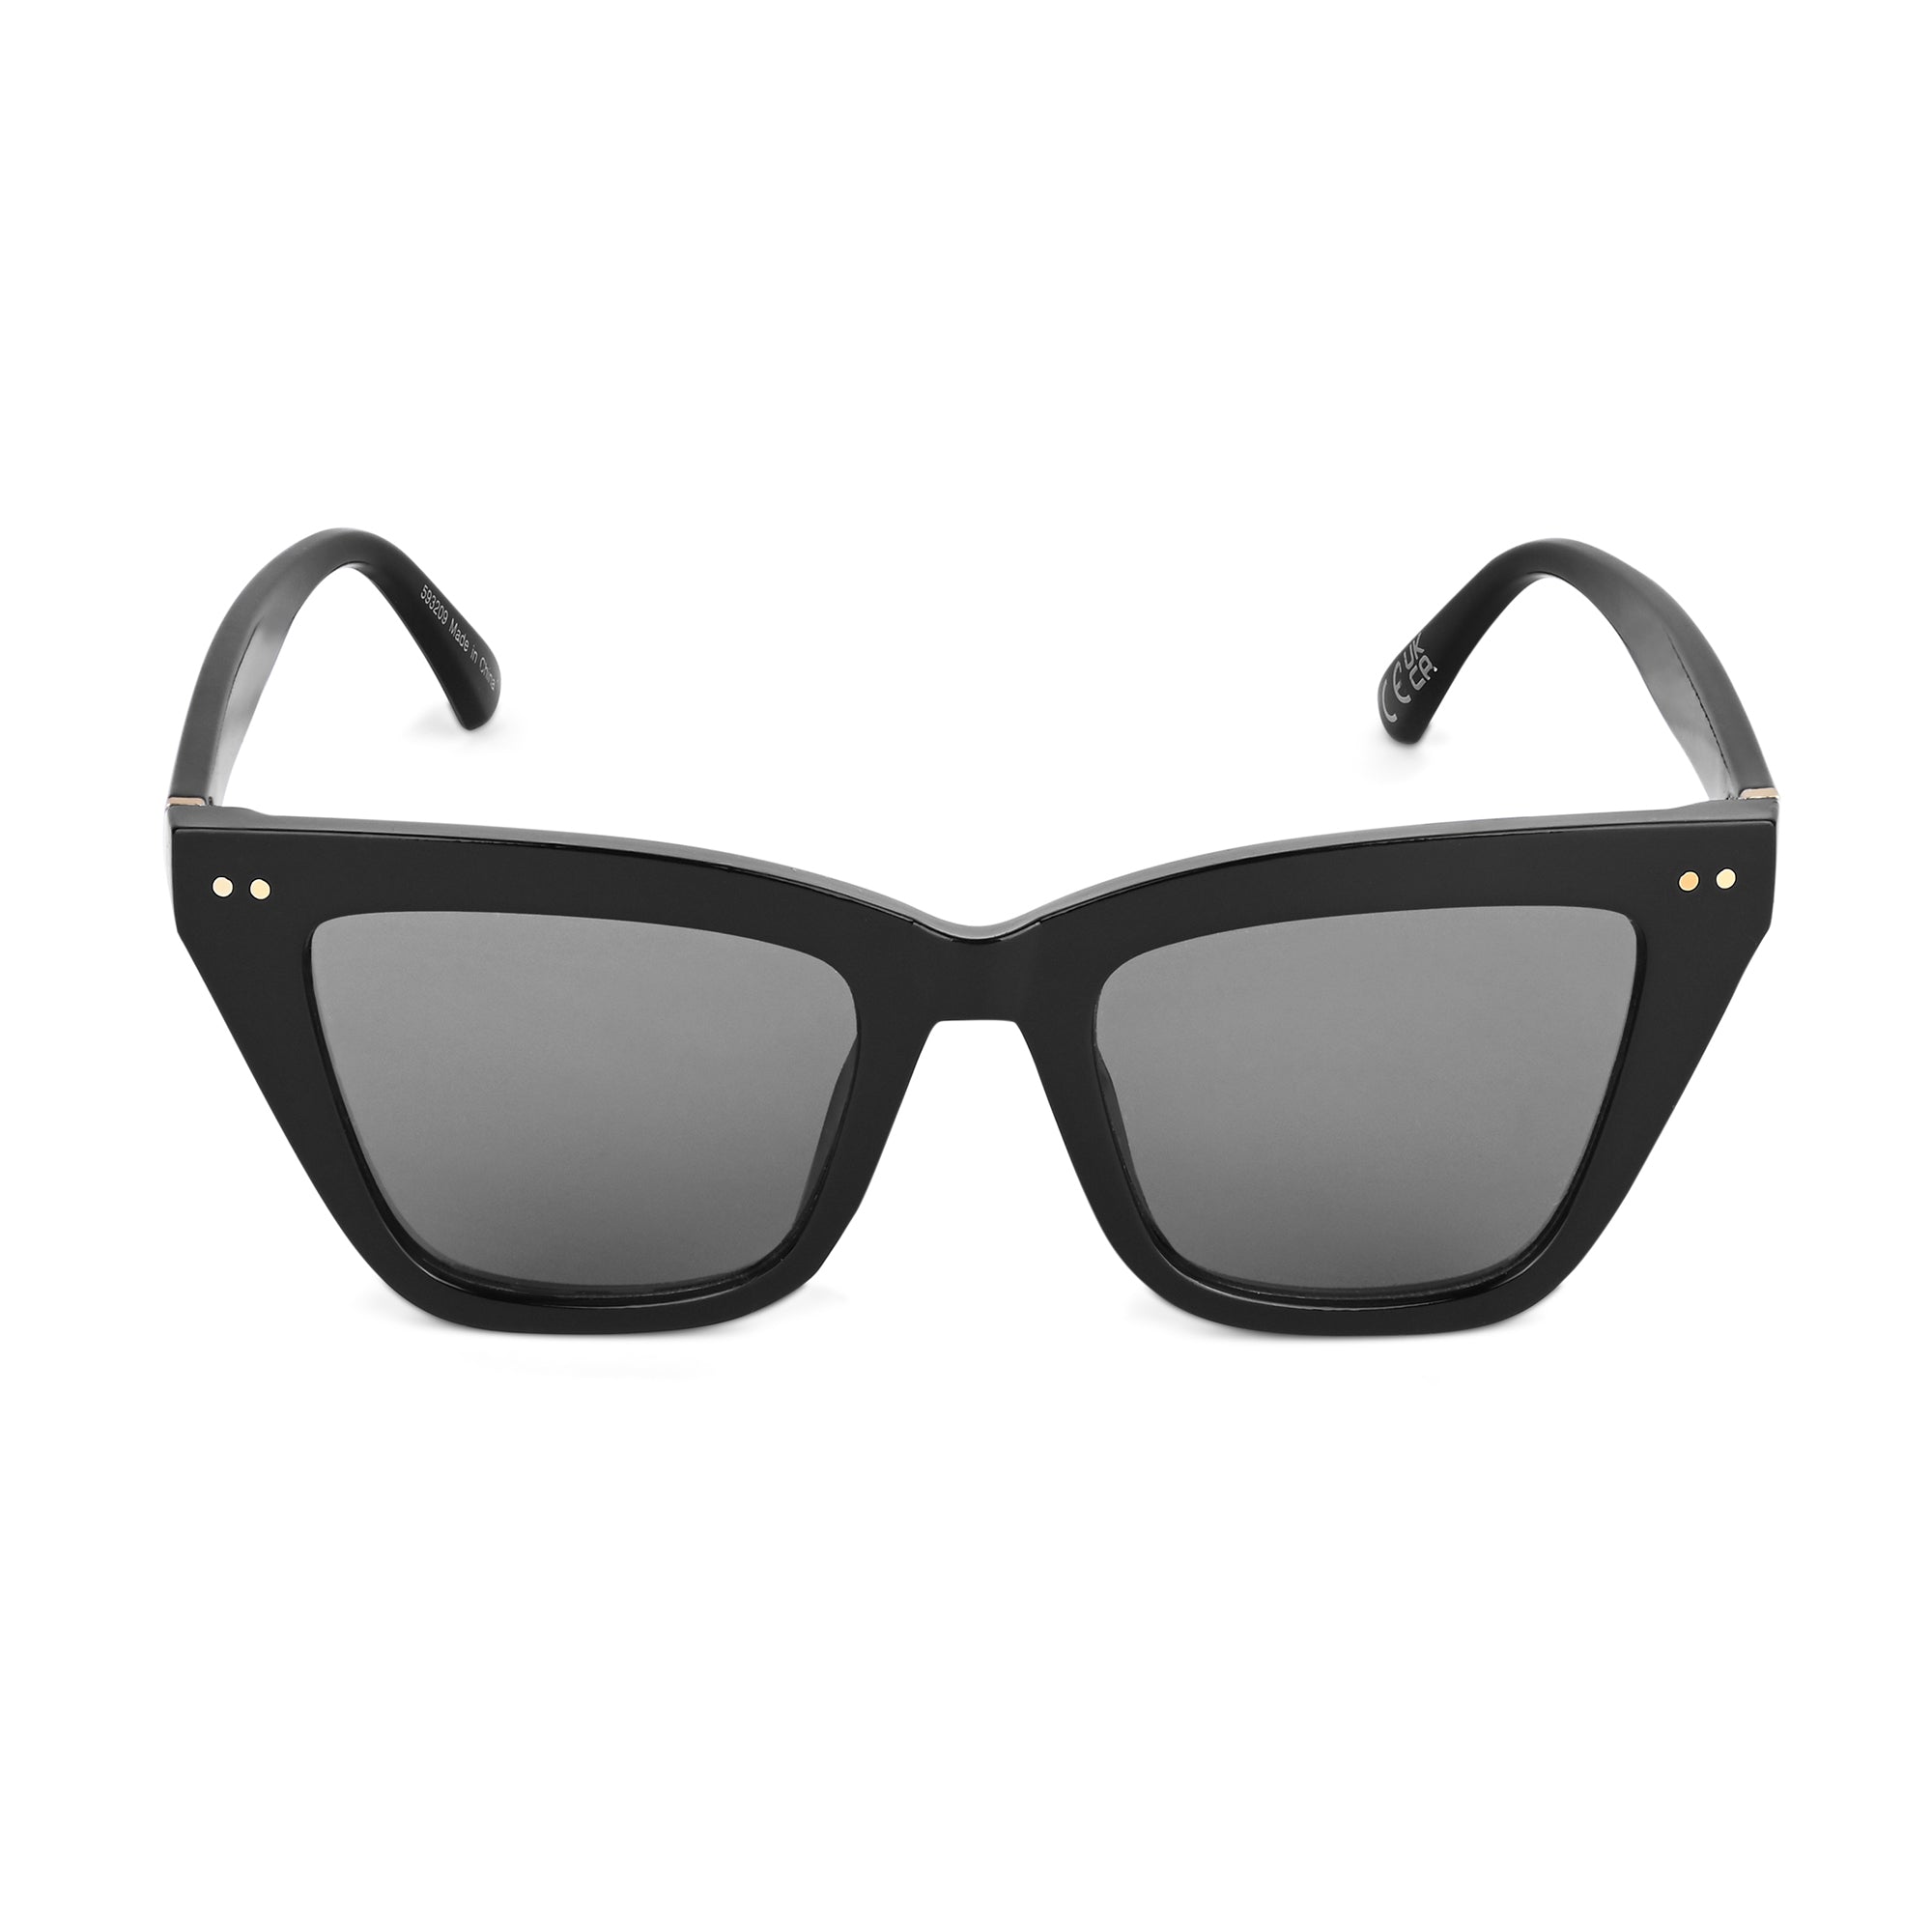 Accessorize London Women's Black Angled Cateye Sunglasses